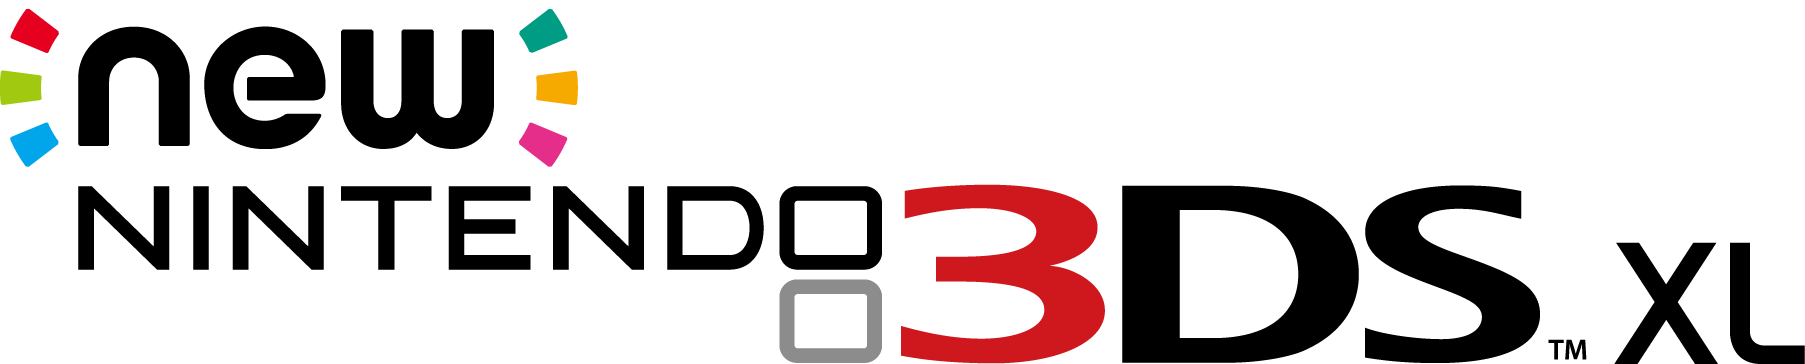 3DS Logo - New Nintendo 3DS XL logo.png